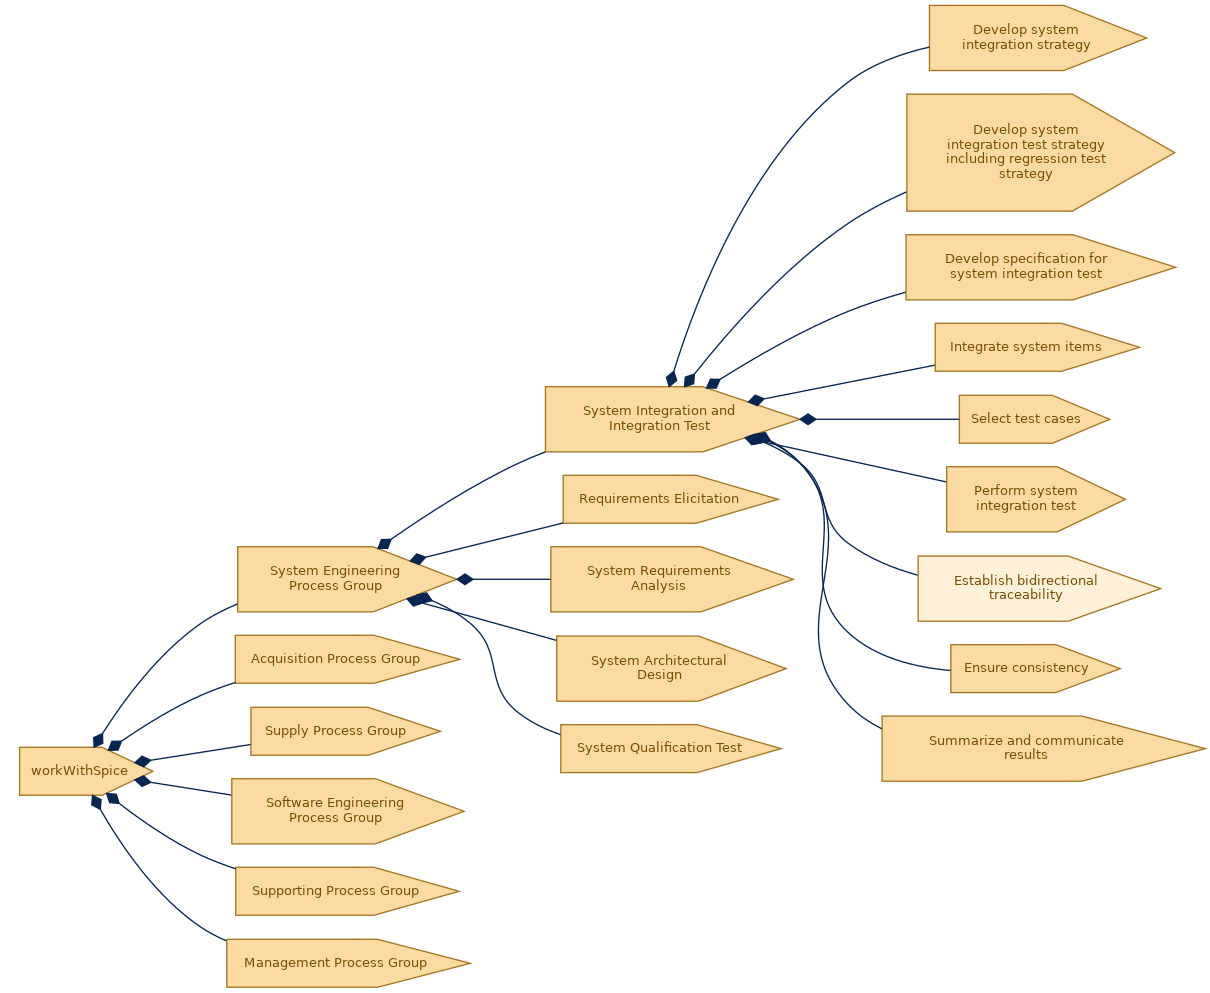 spem diagram of the activity breakdown: Establish bidirectional traceability